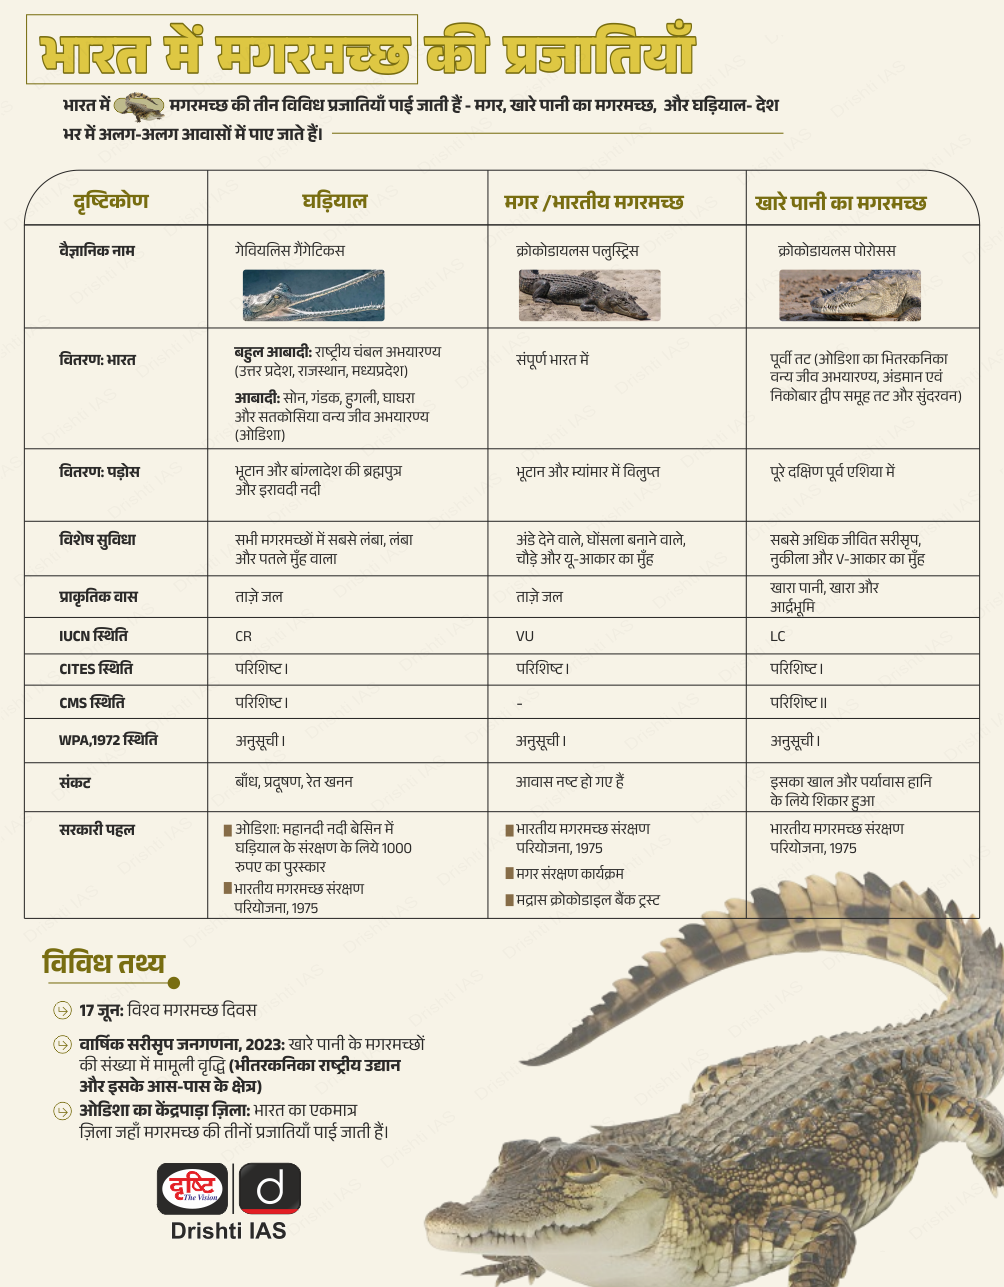 crocodile species in india